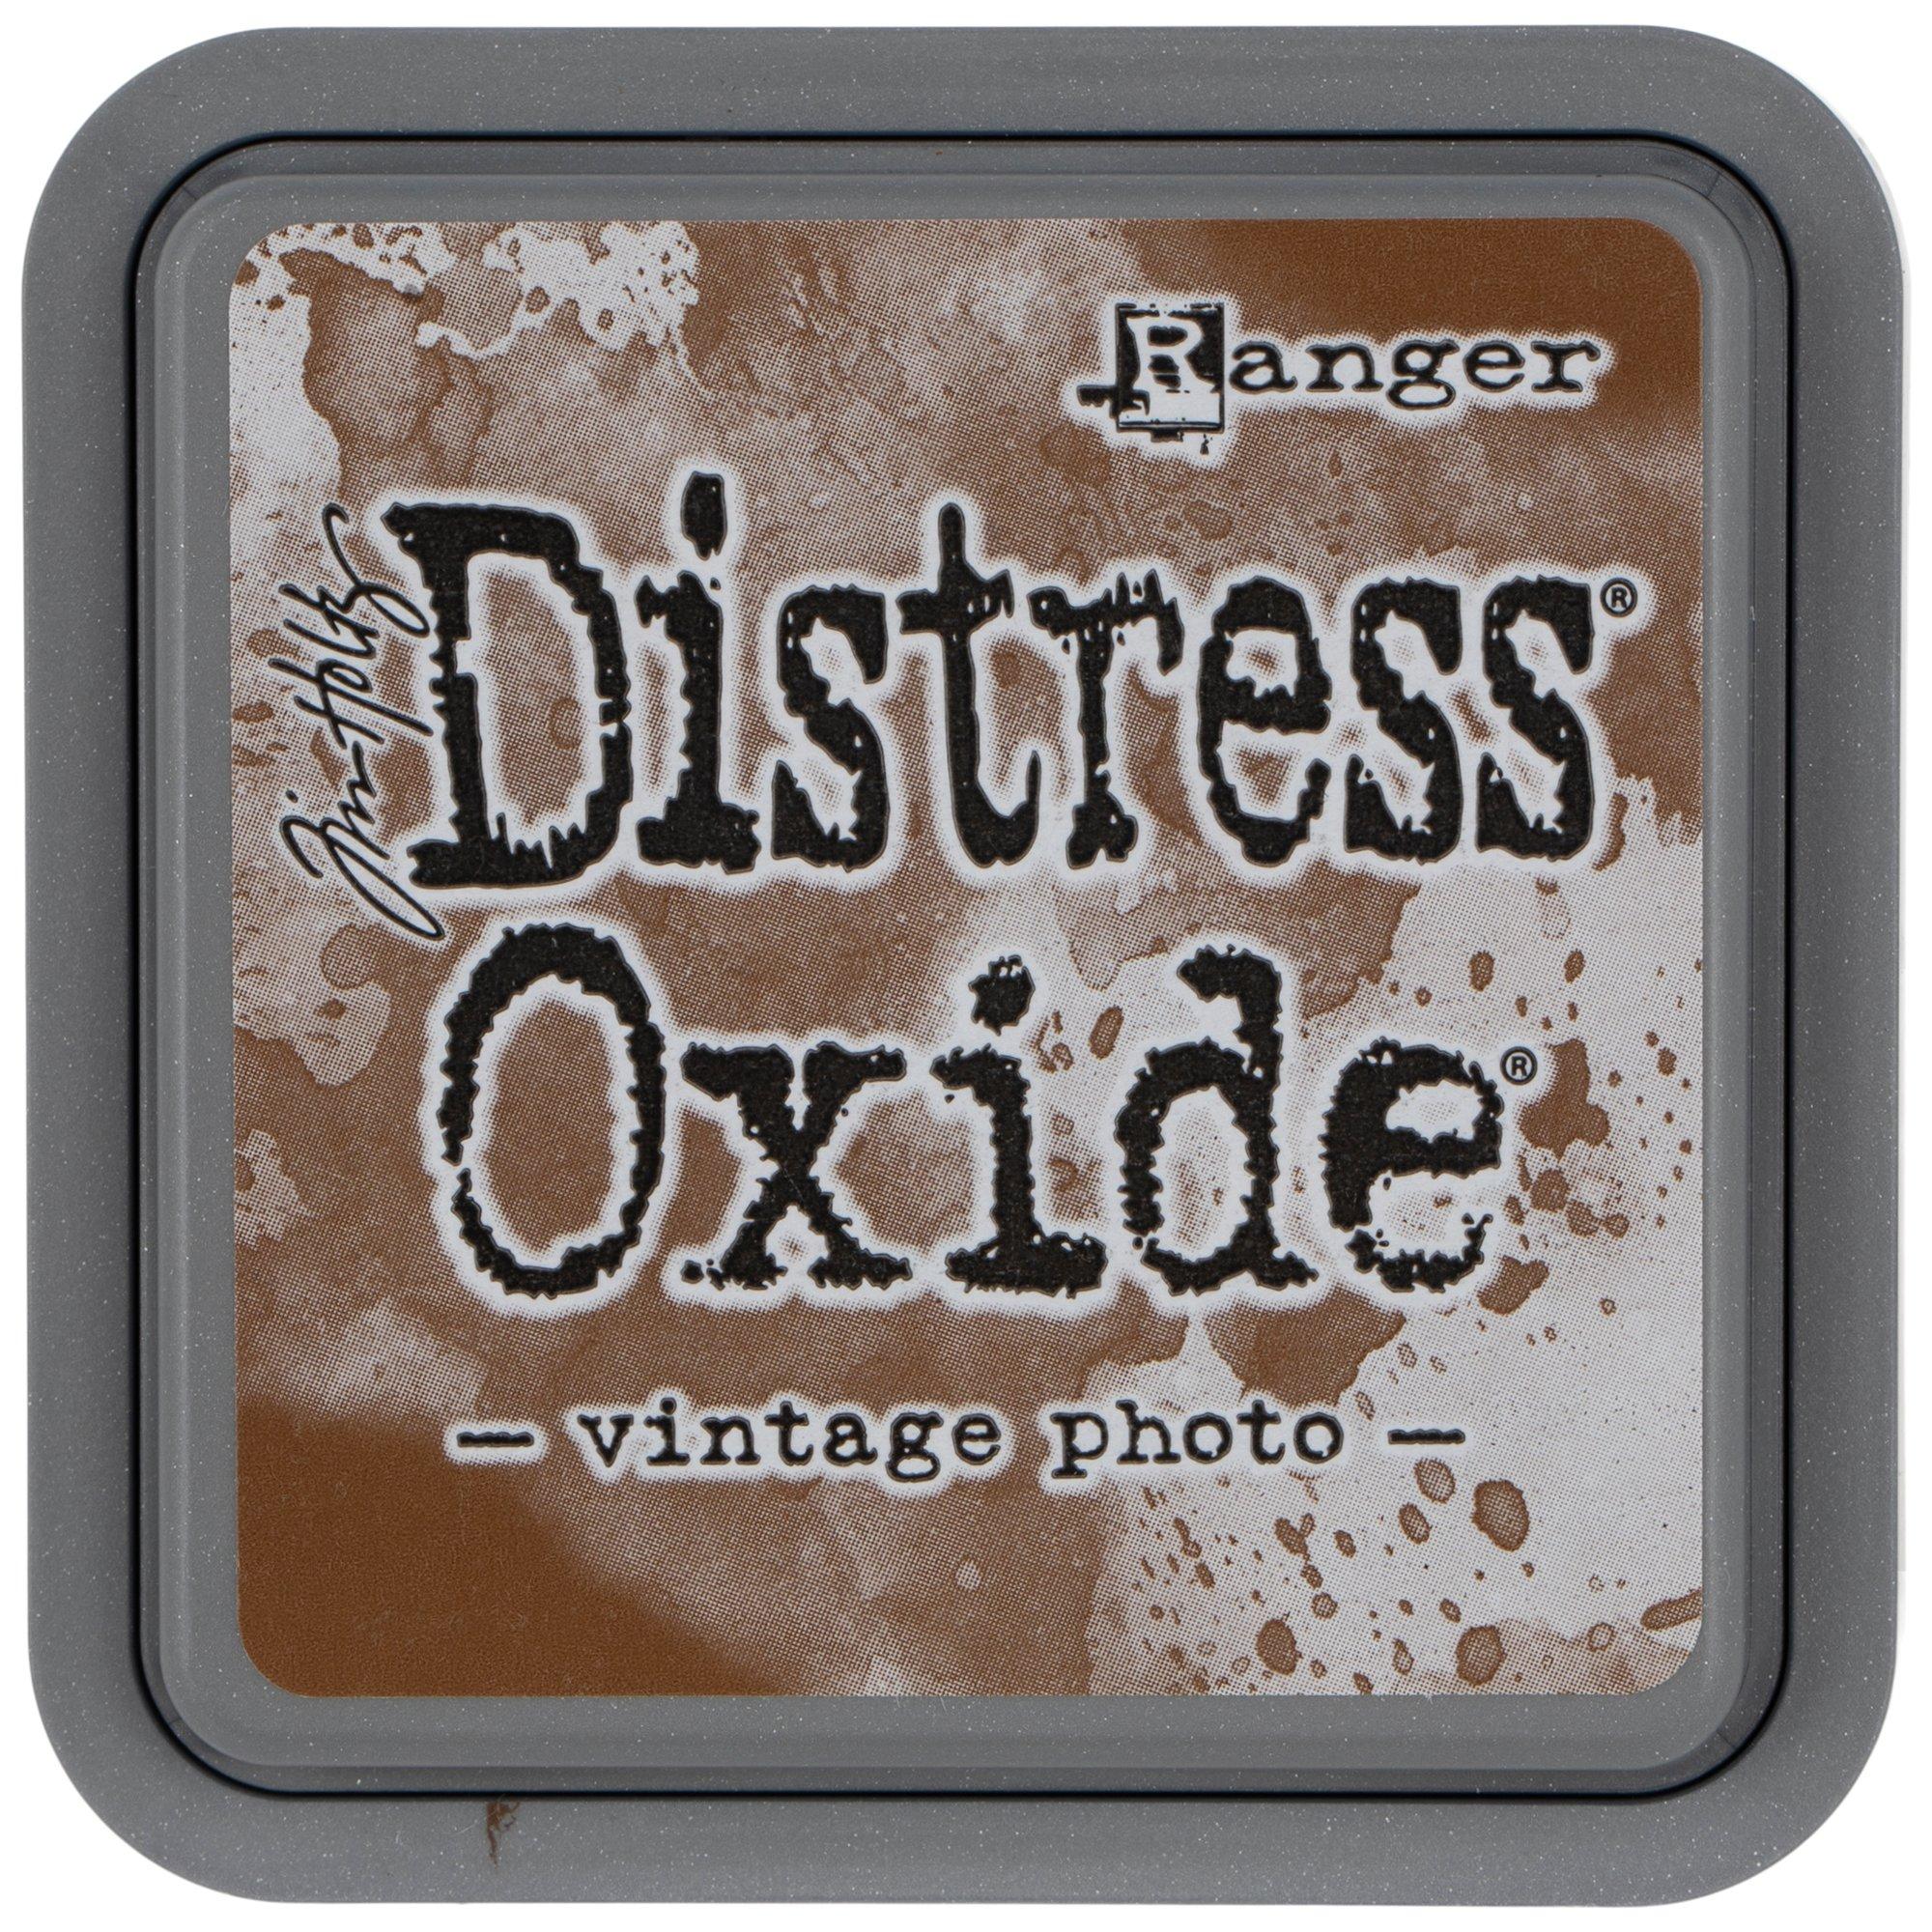 Tim Holtz Distress Oxide Ink Pads: Set #5, 12 Color Bundle